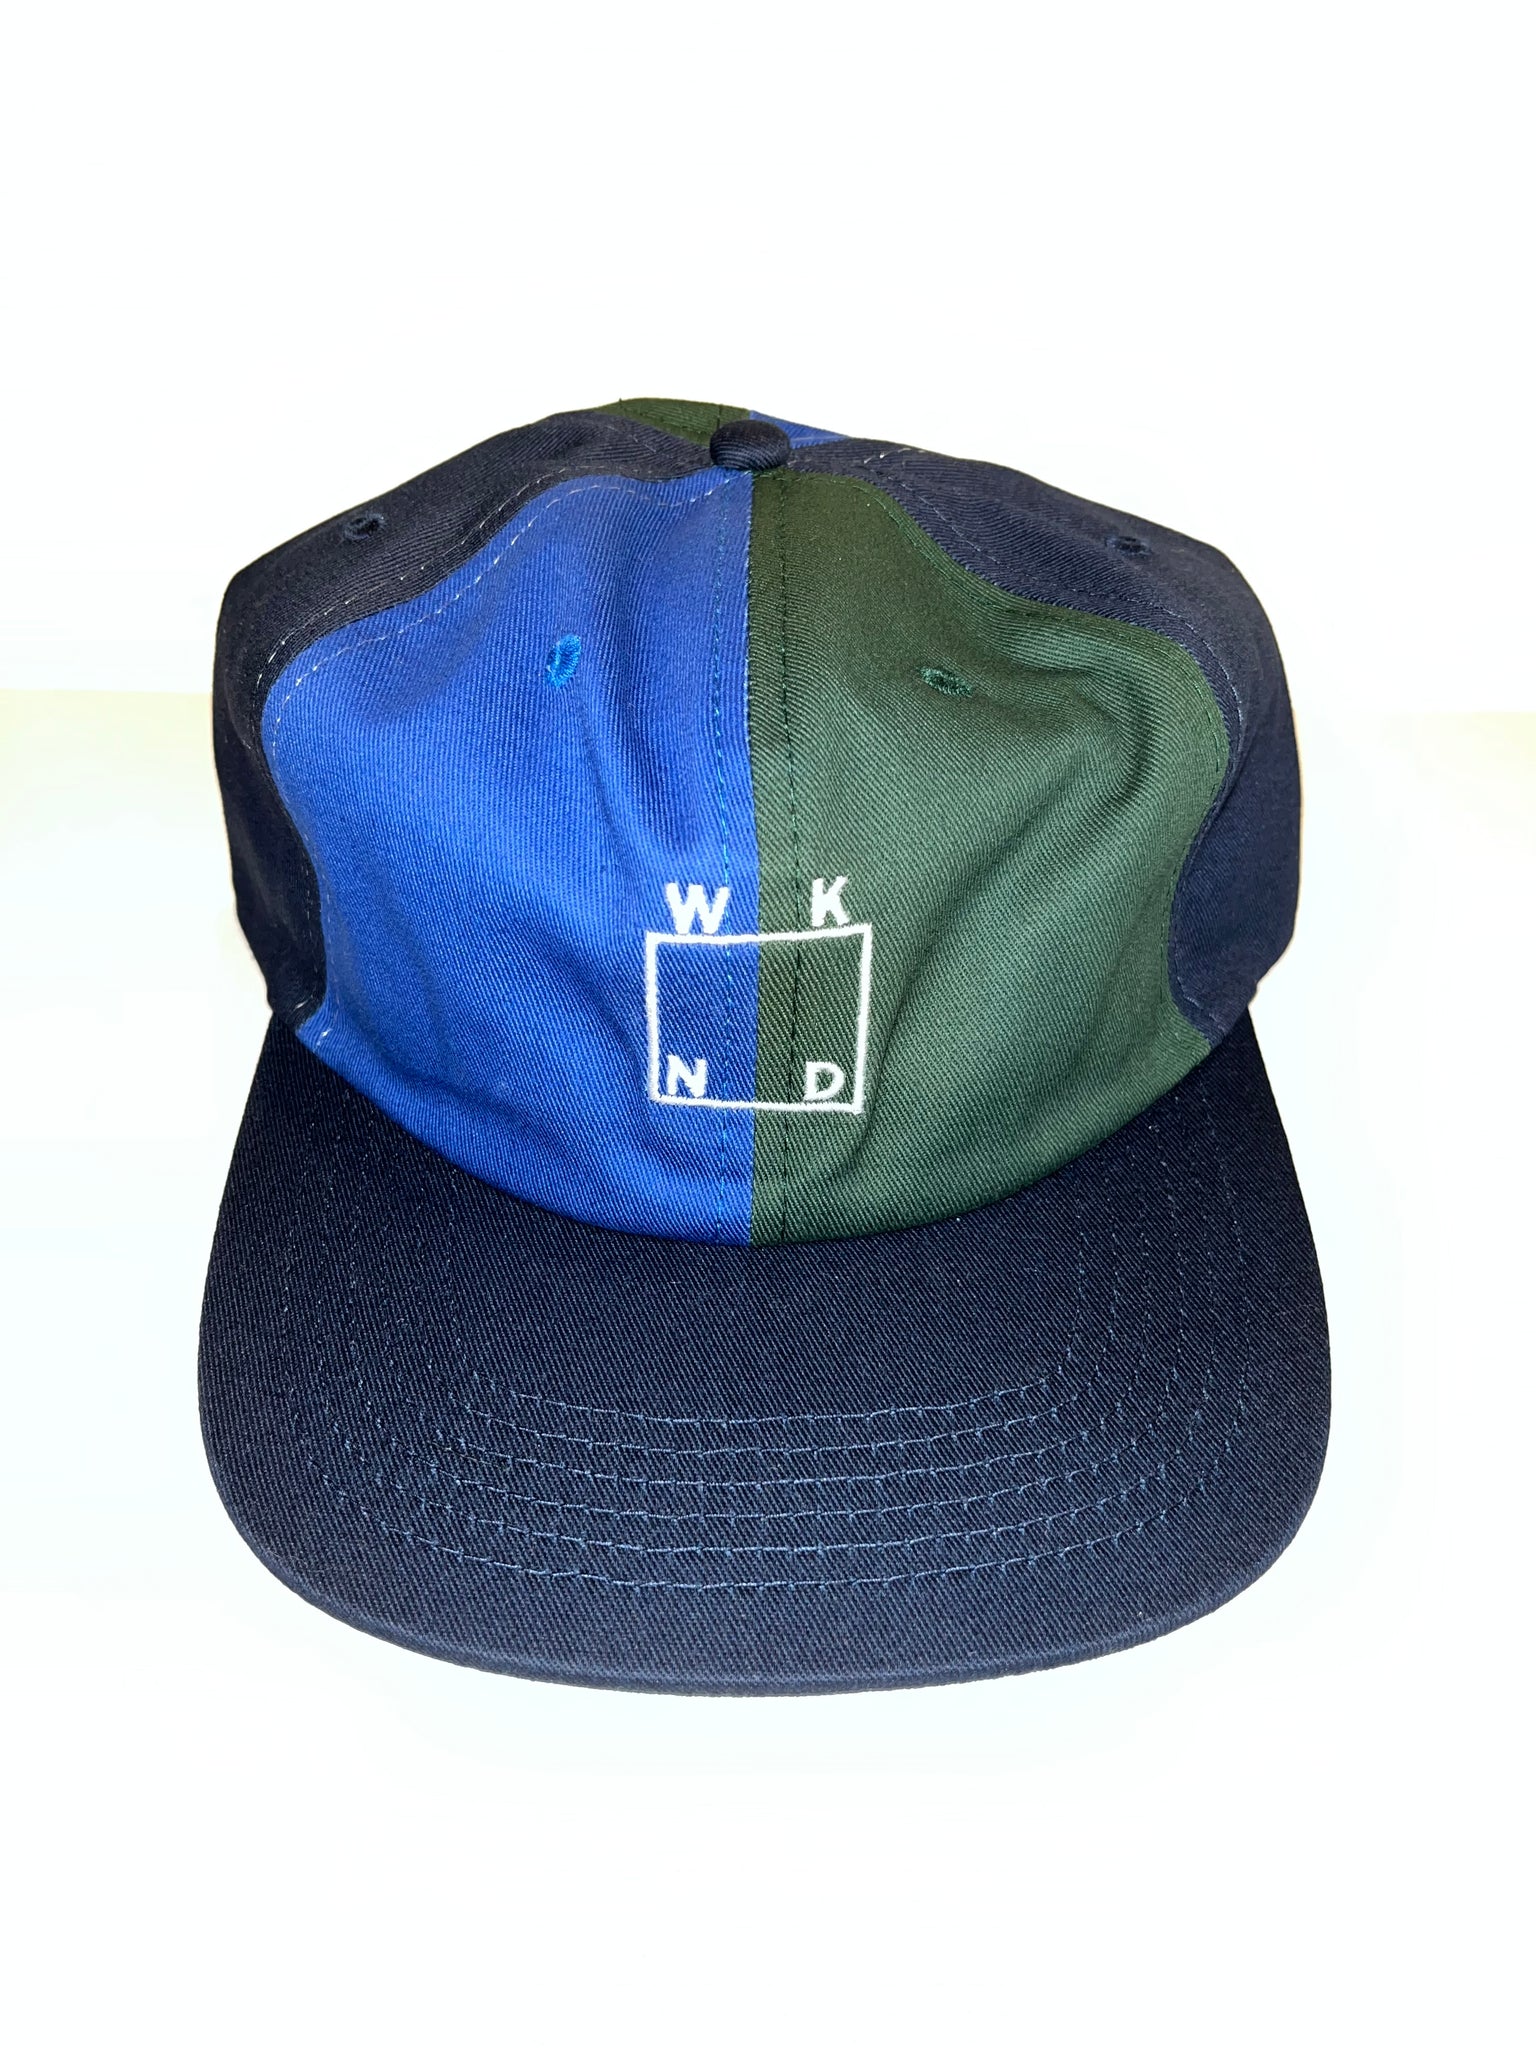 WKND Logo 6 Panel Deep Snapback Hat - Blues